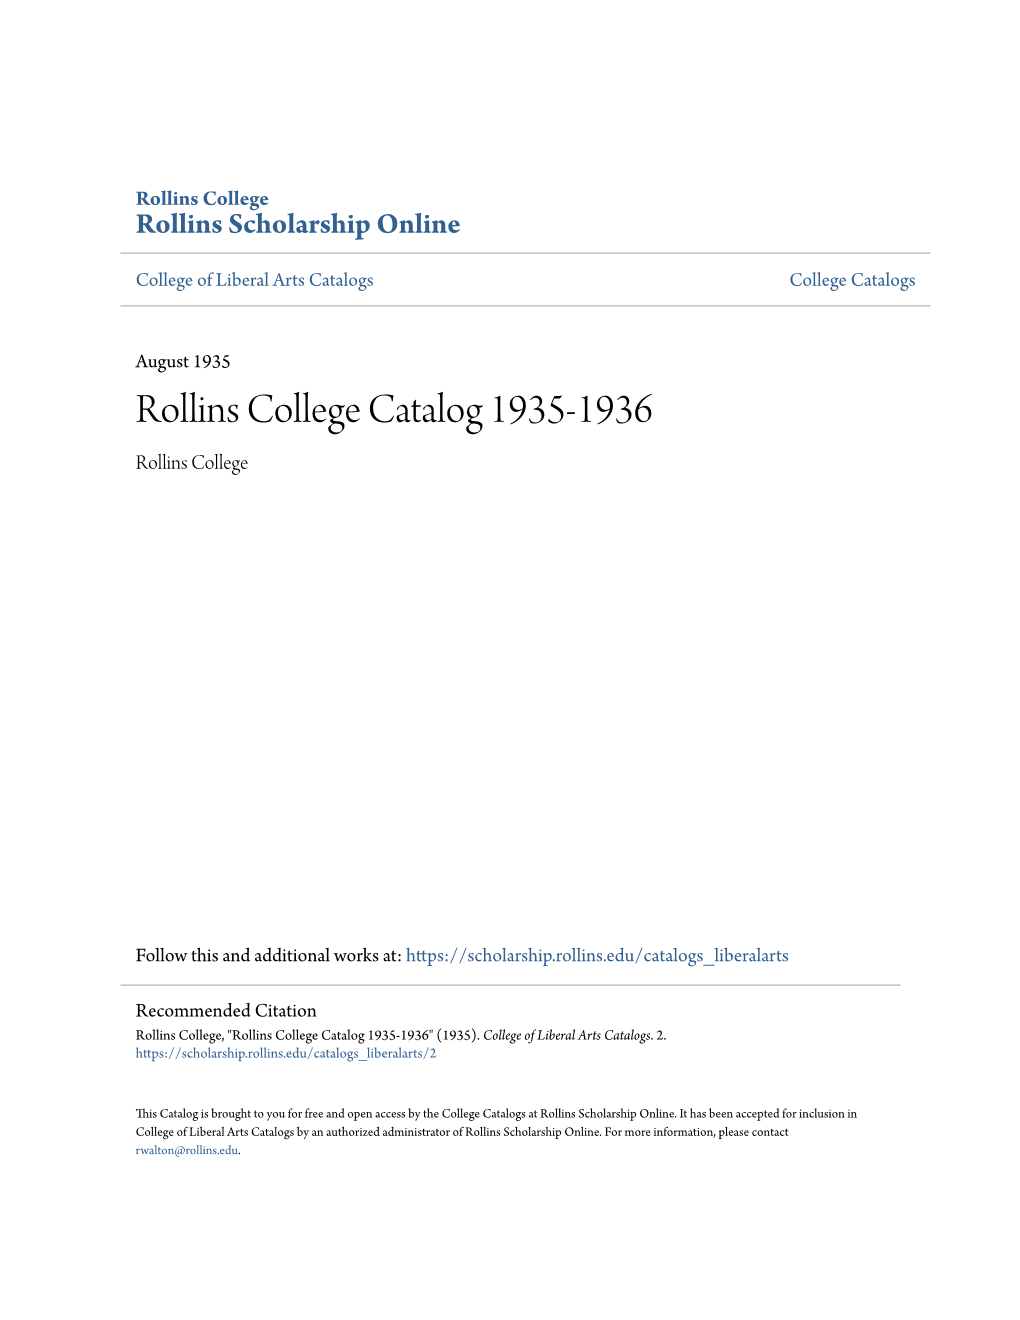 Rollins College Catalog 1935-1936 Rollins College